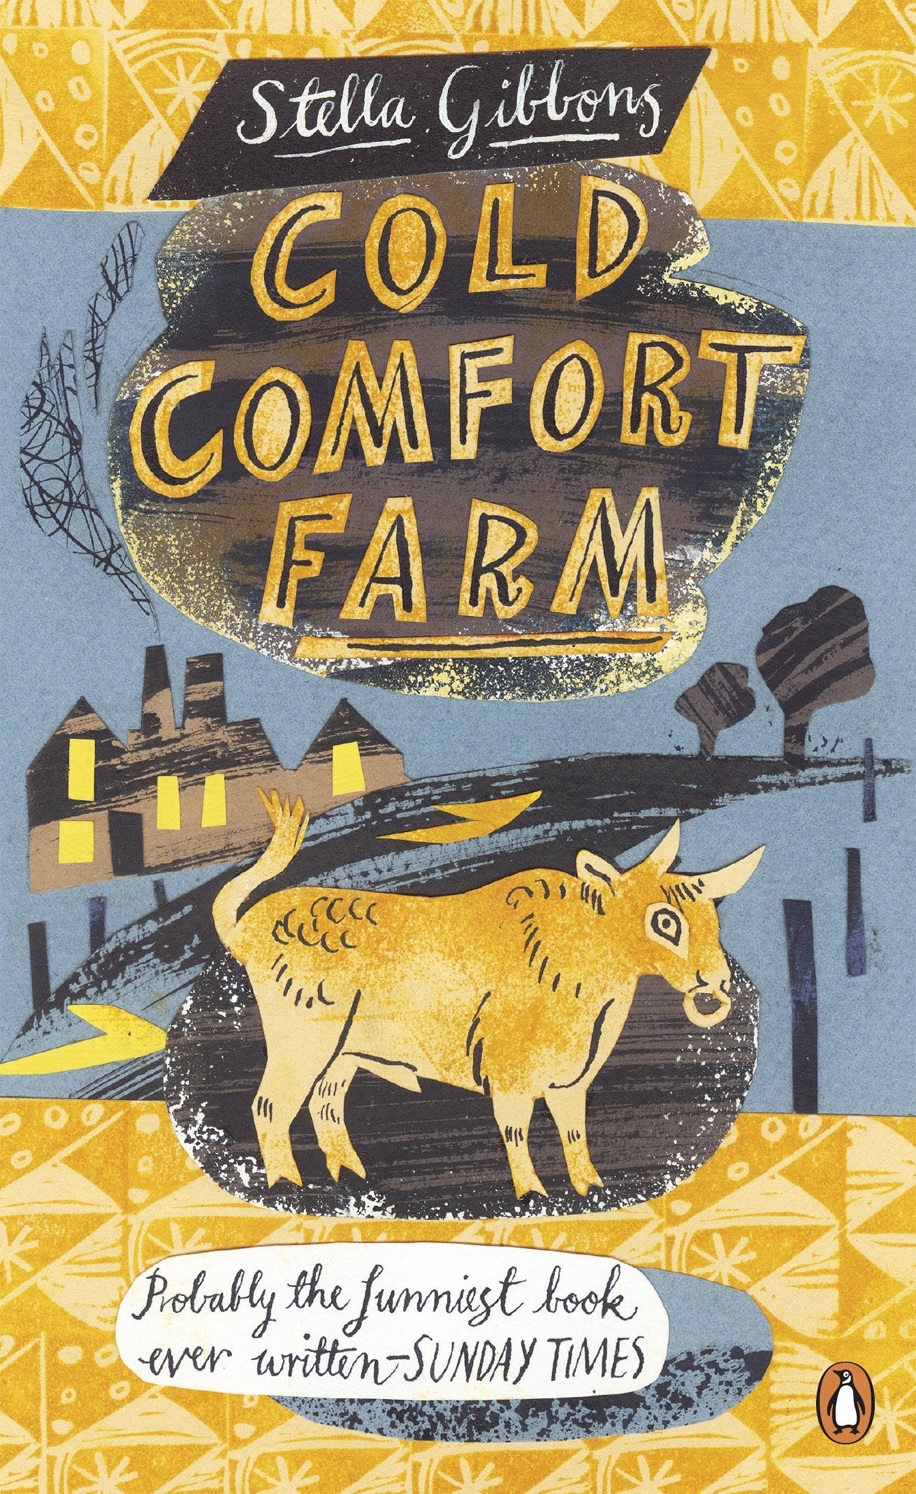 Cold Comfort Farm